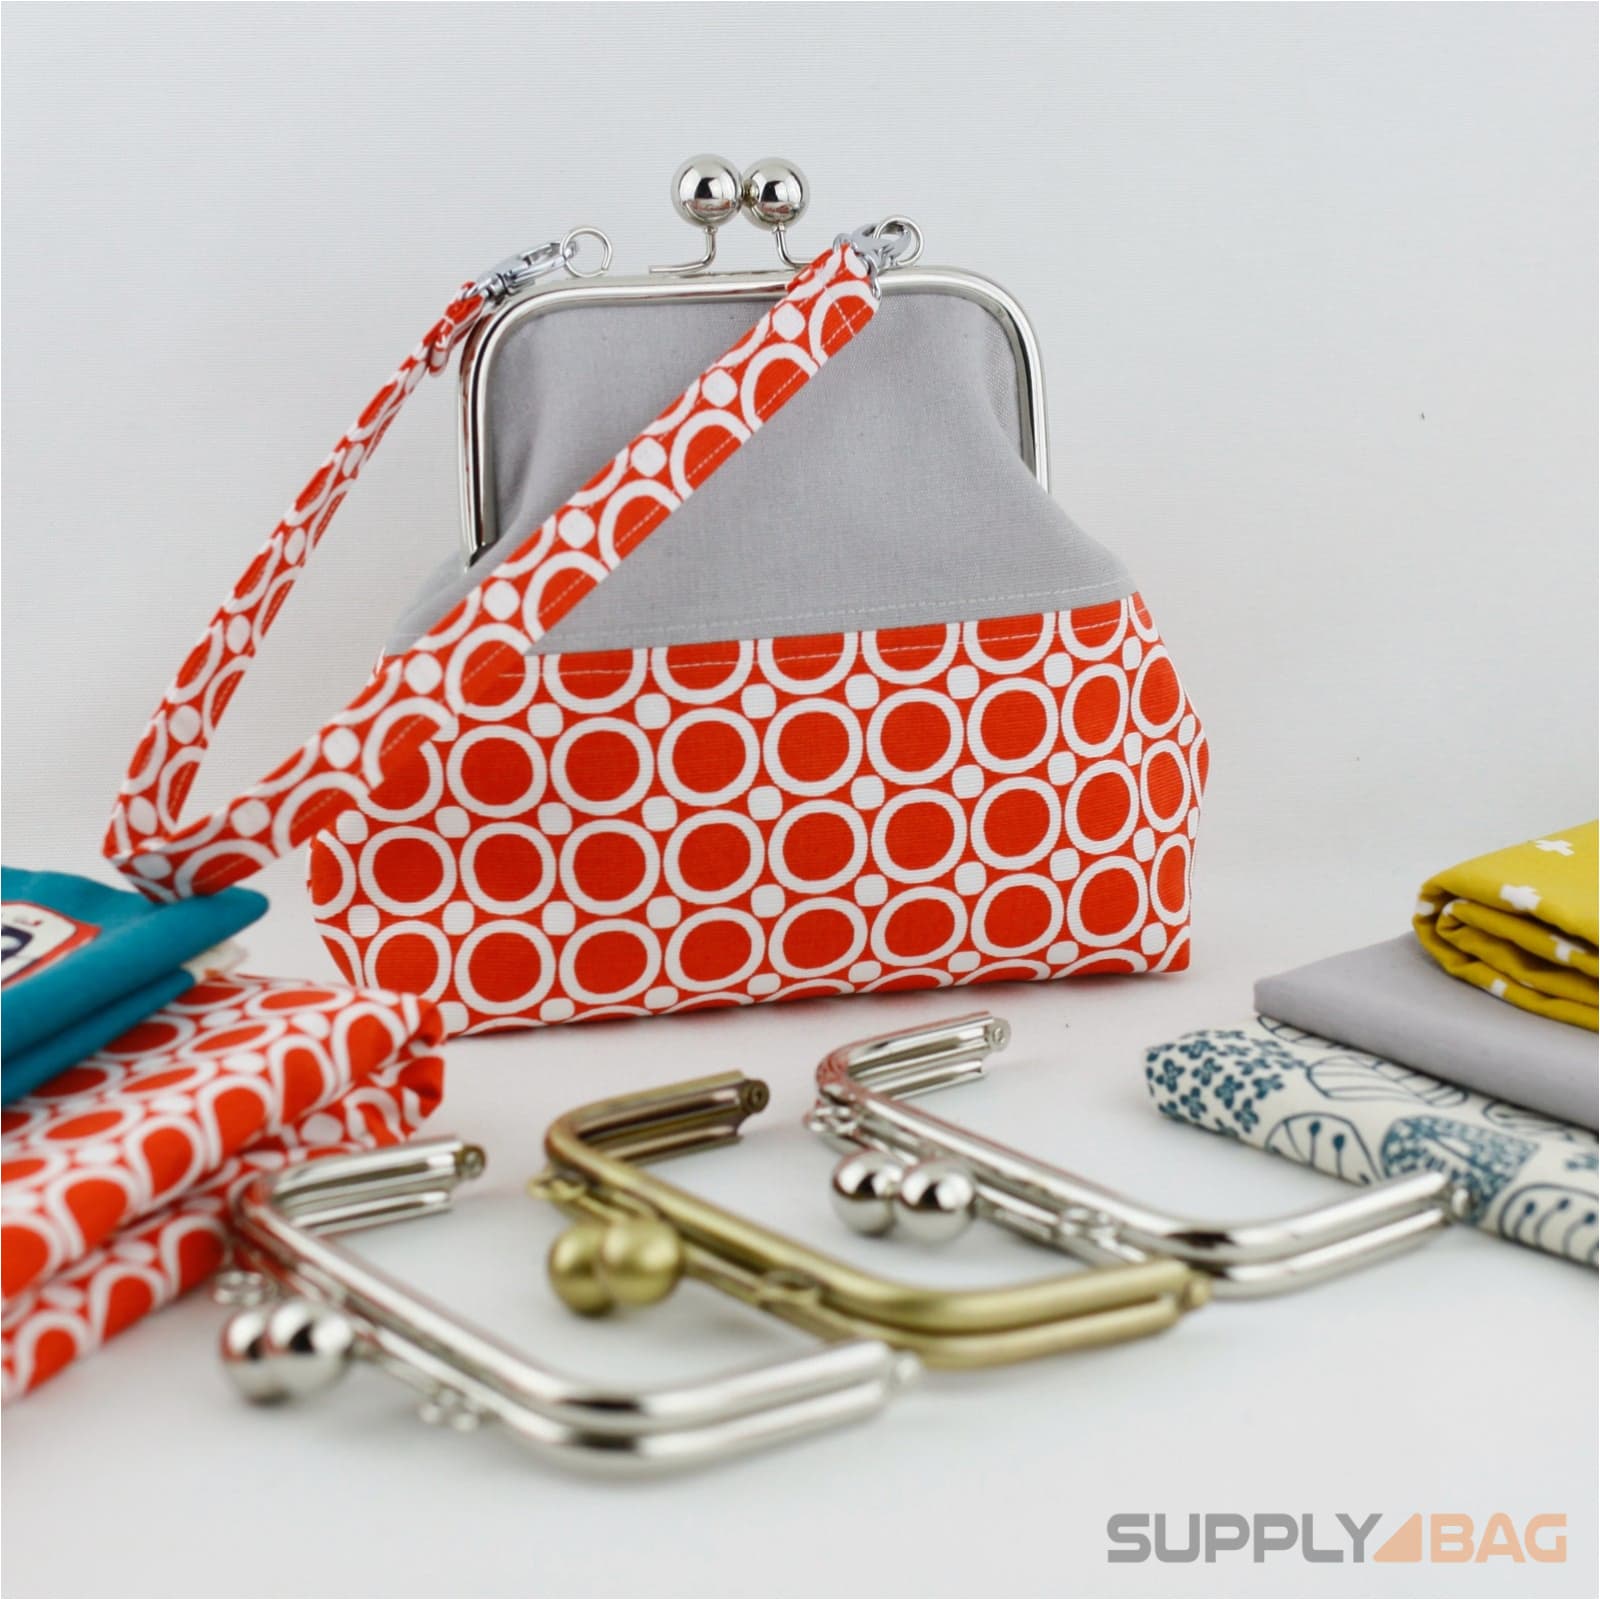 Curved Metal Purse Frame, Purse Closure, Metal Frame, Handbag Supplies - 5